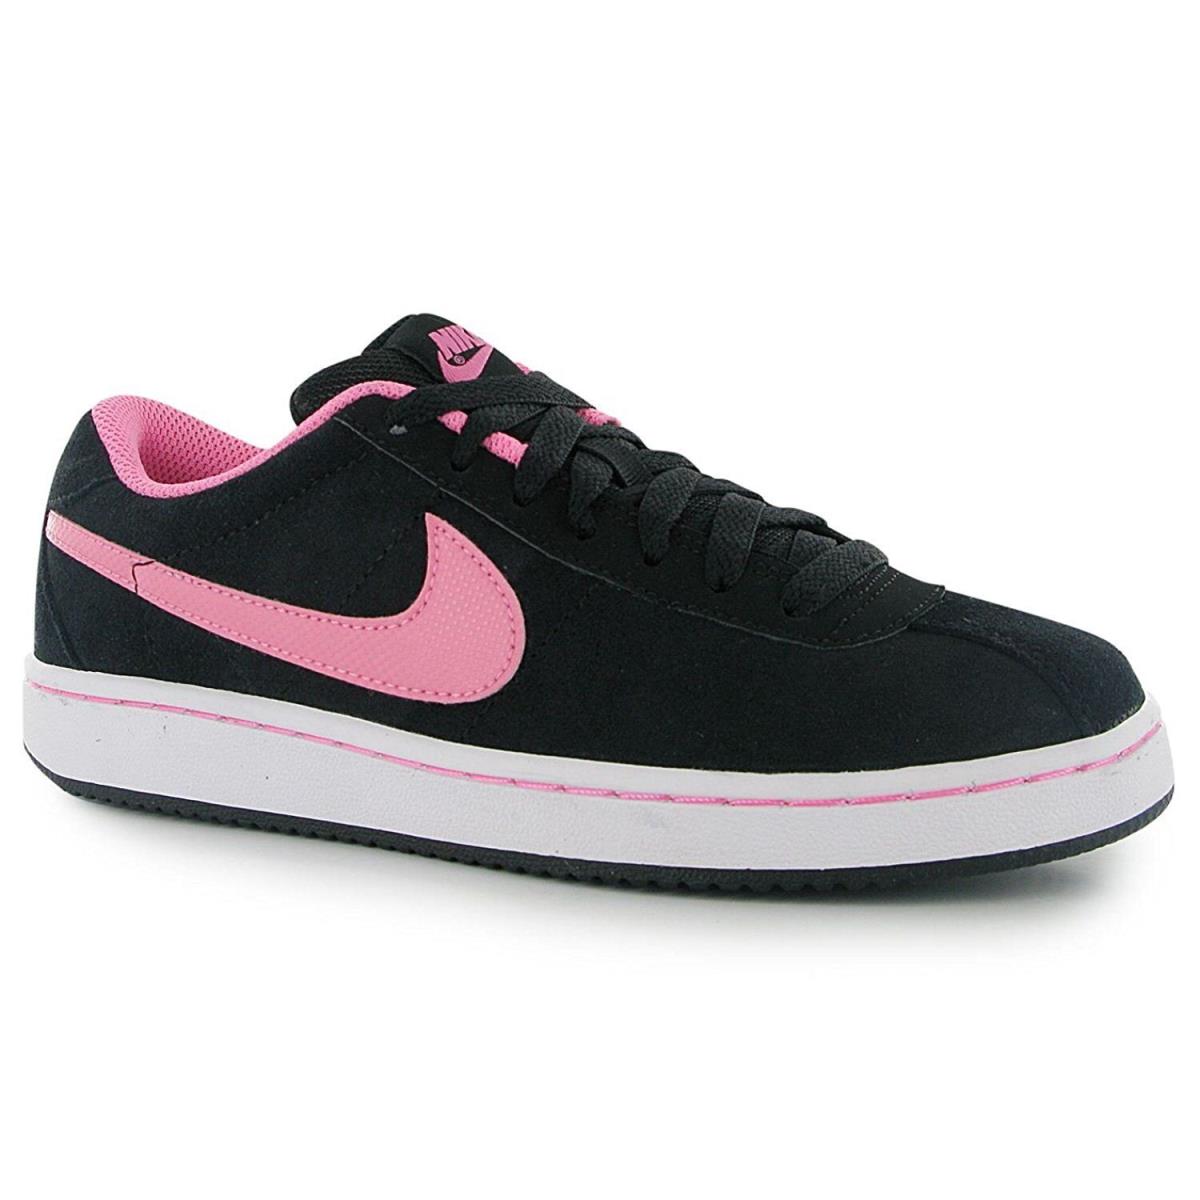 Nike Trainer Brutez Plus GS Kids. Black/polarized Pink/white. Sz 7Y